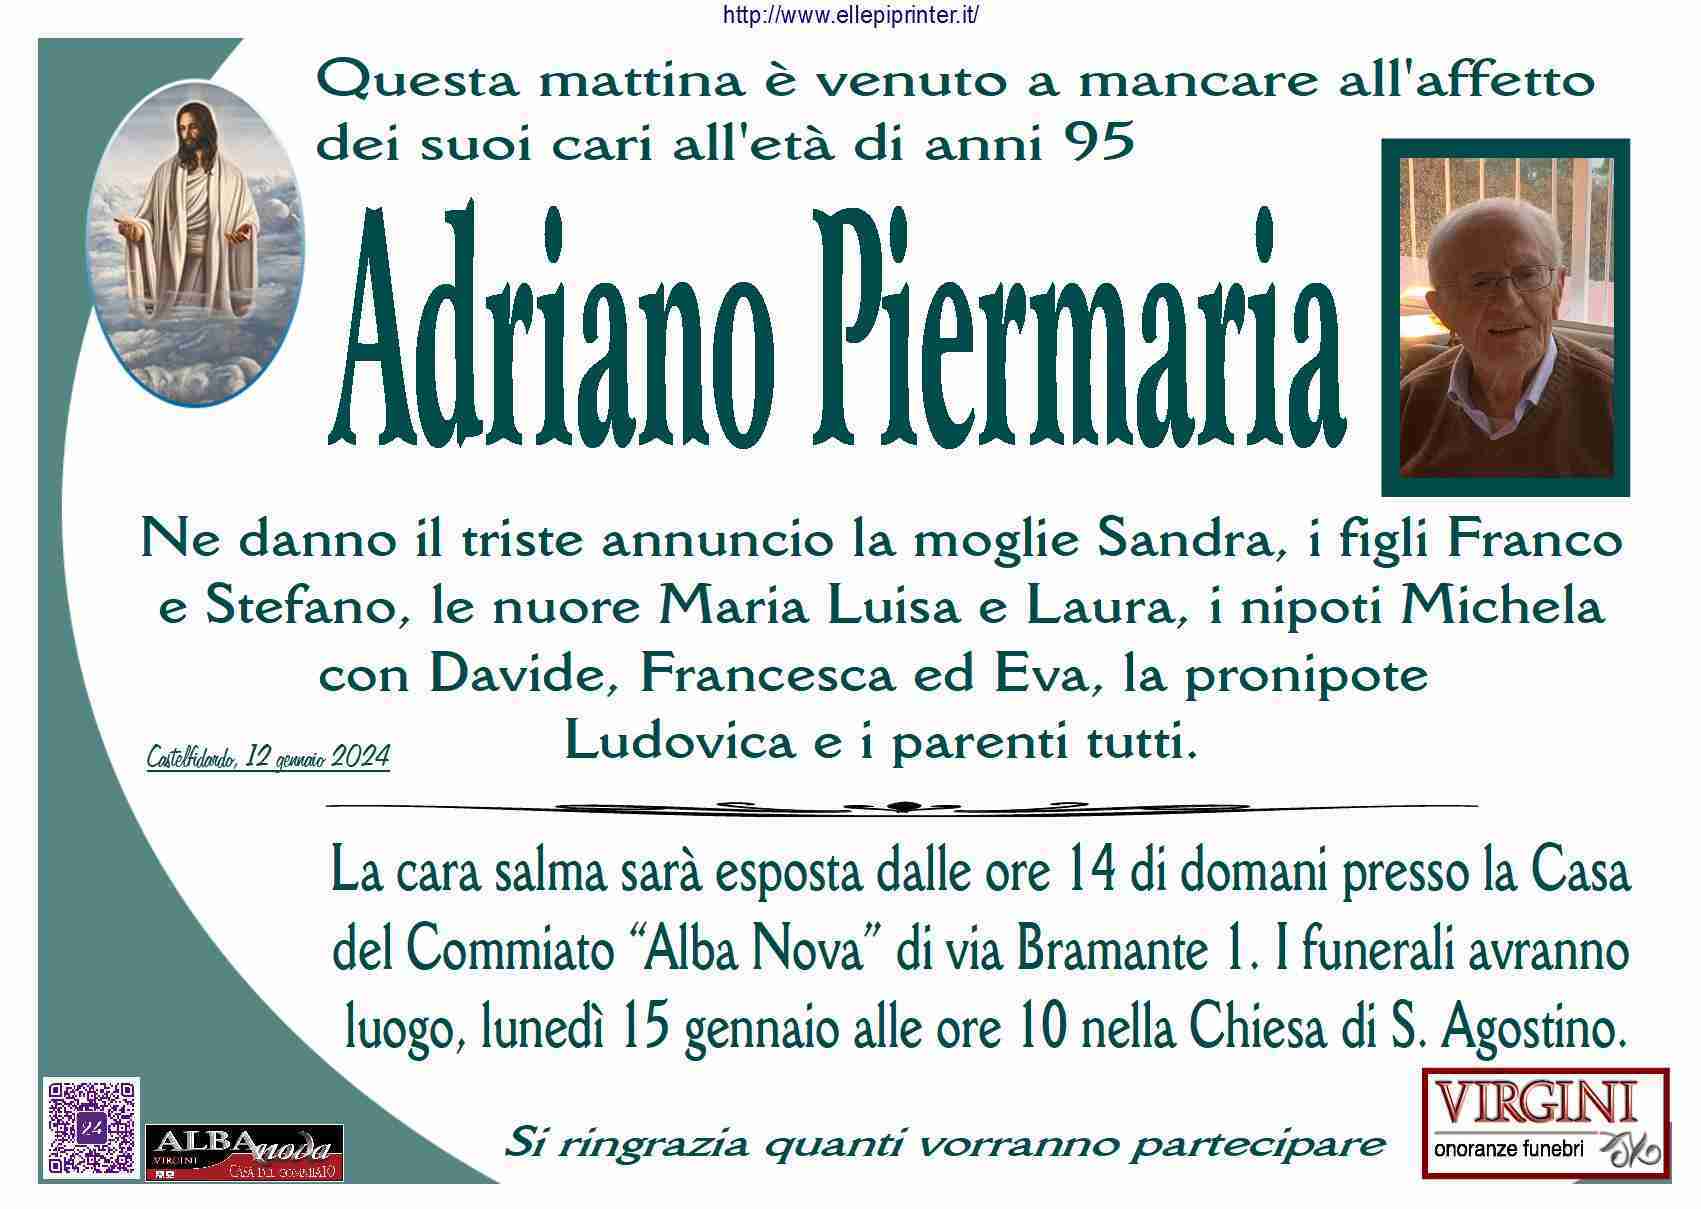 Adriano Piermaria